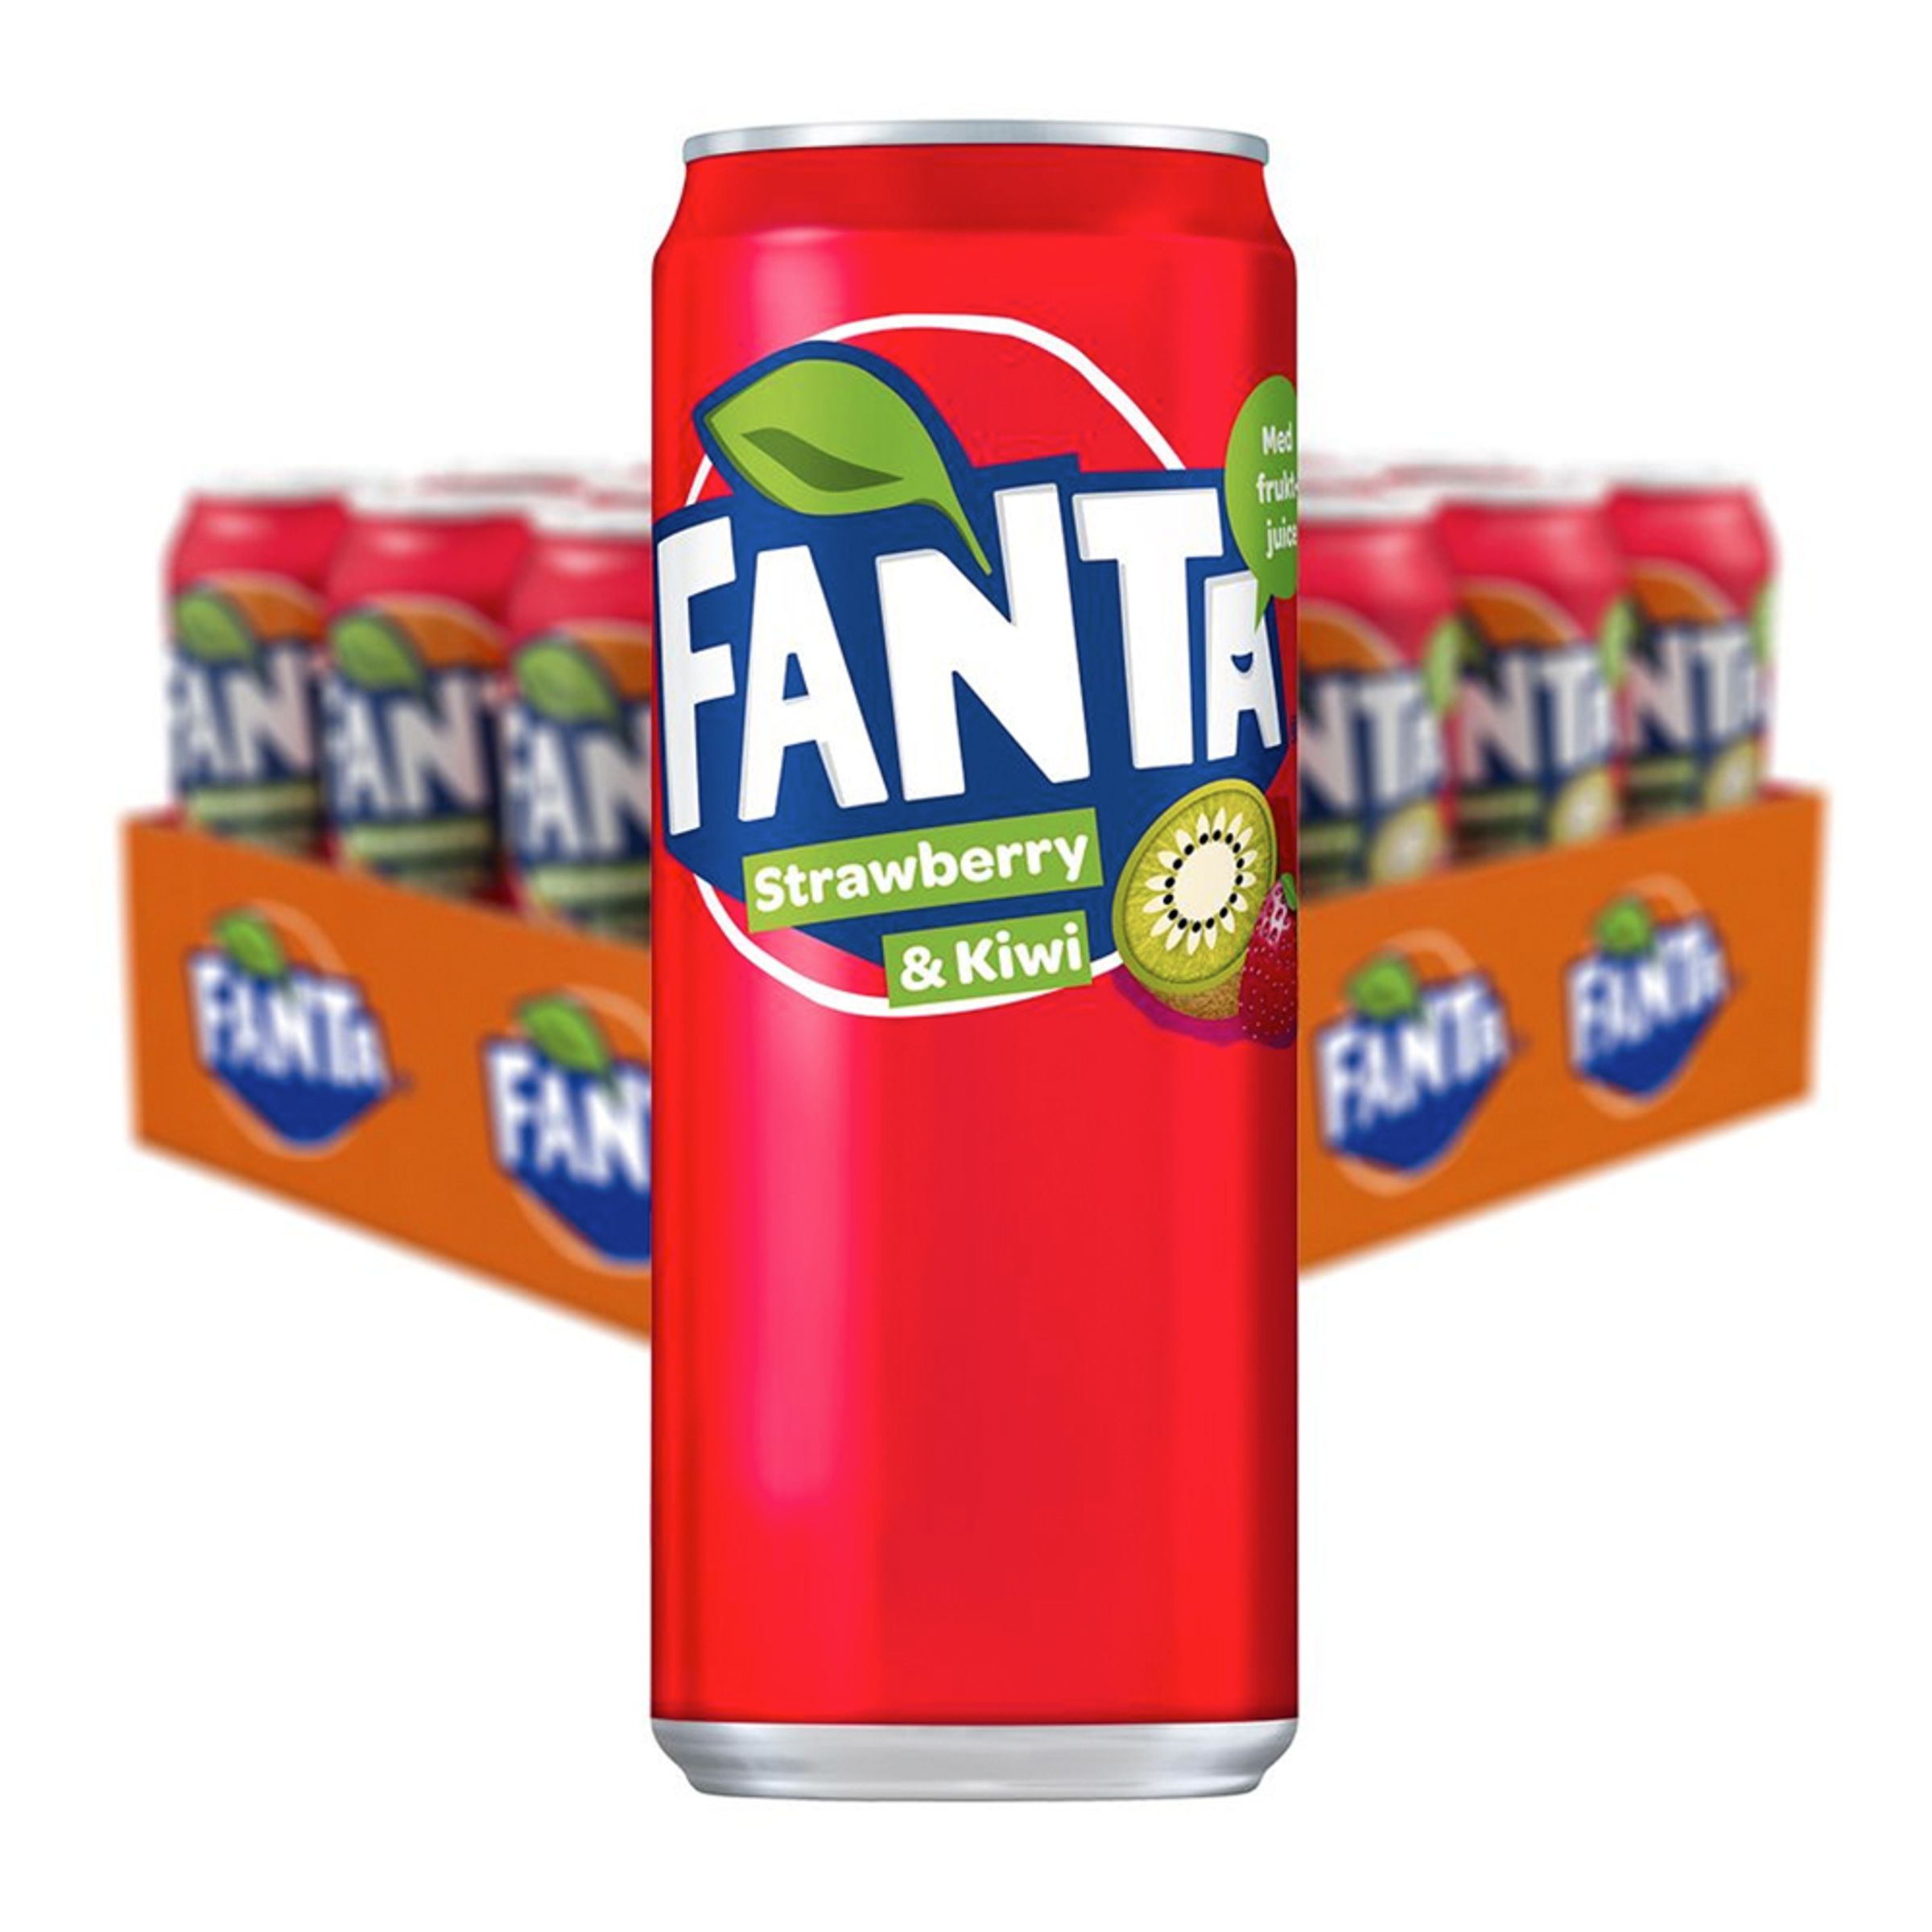 Fanta Strawberry/Kiwi - 20-pack (Hel platta)